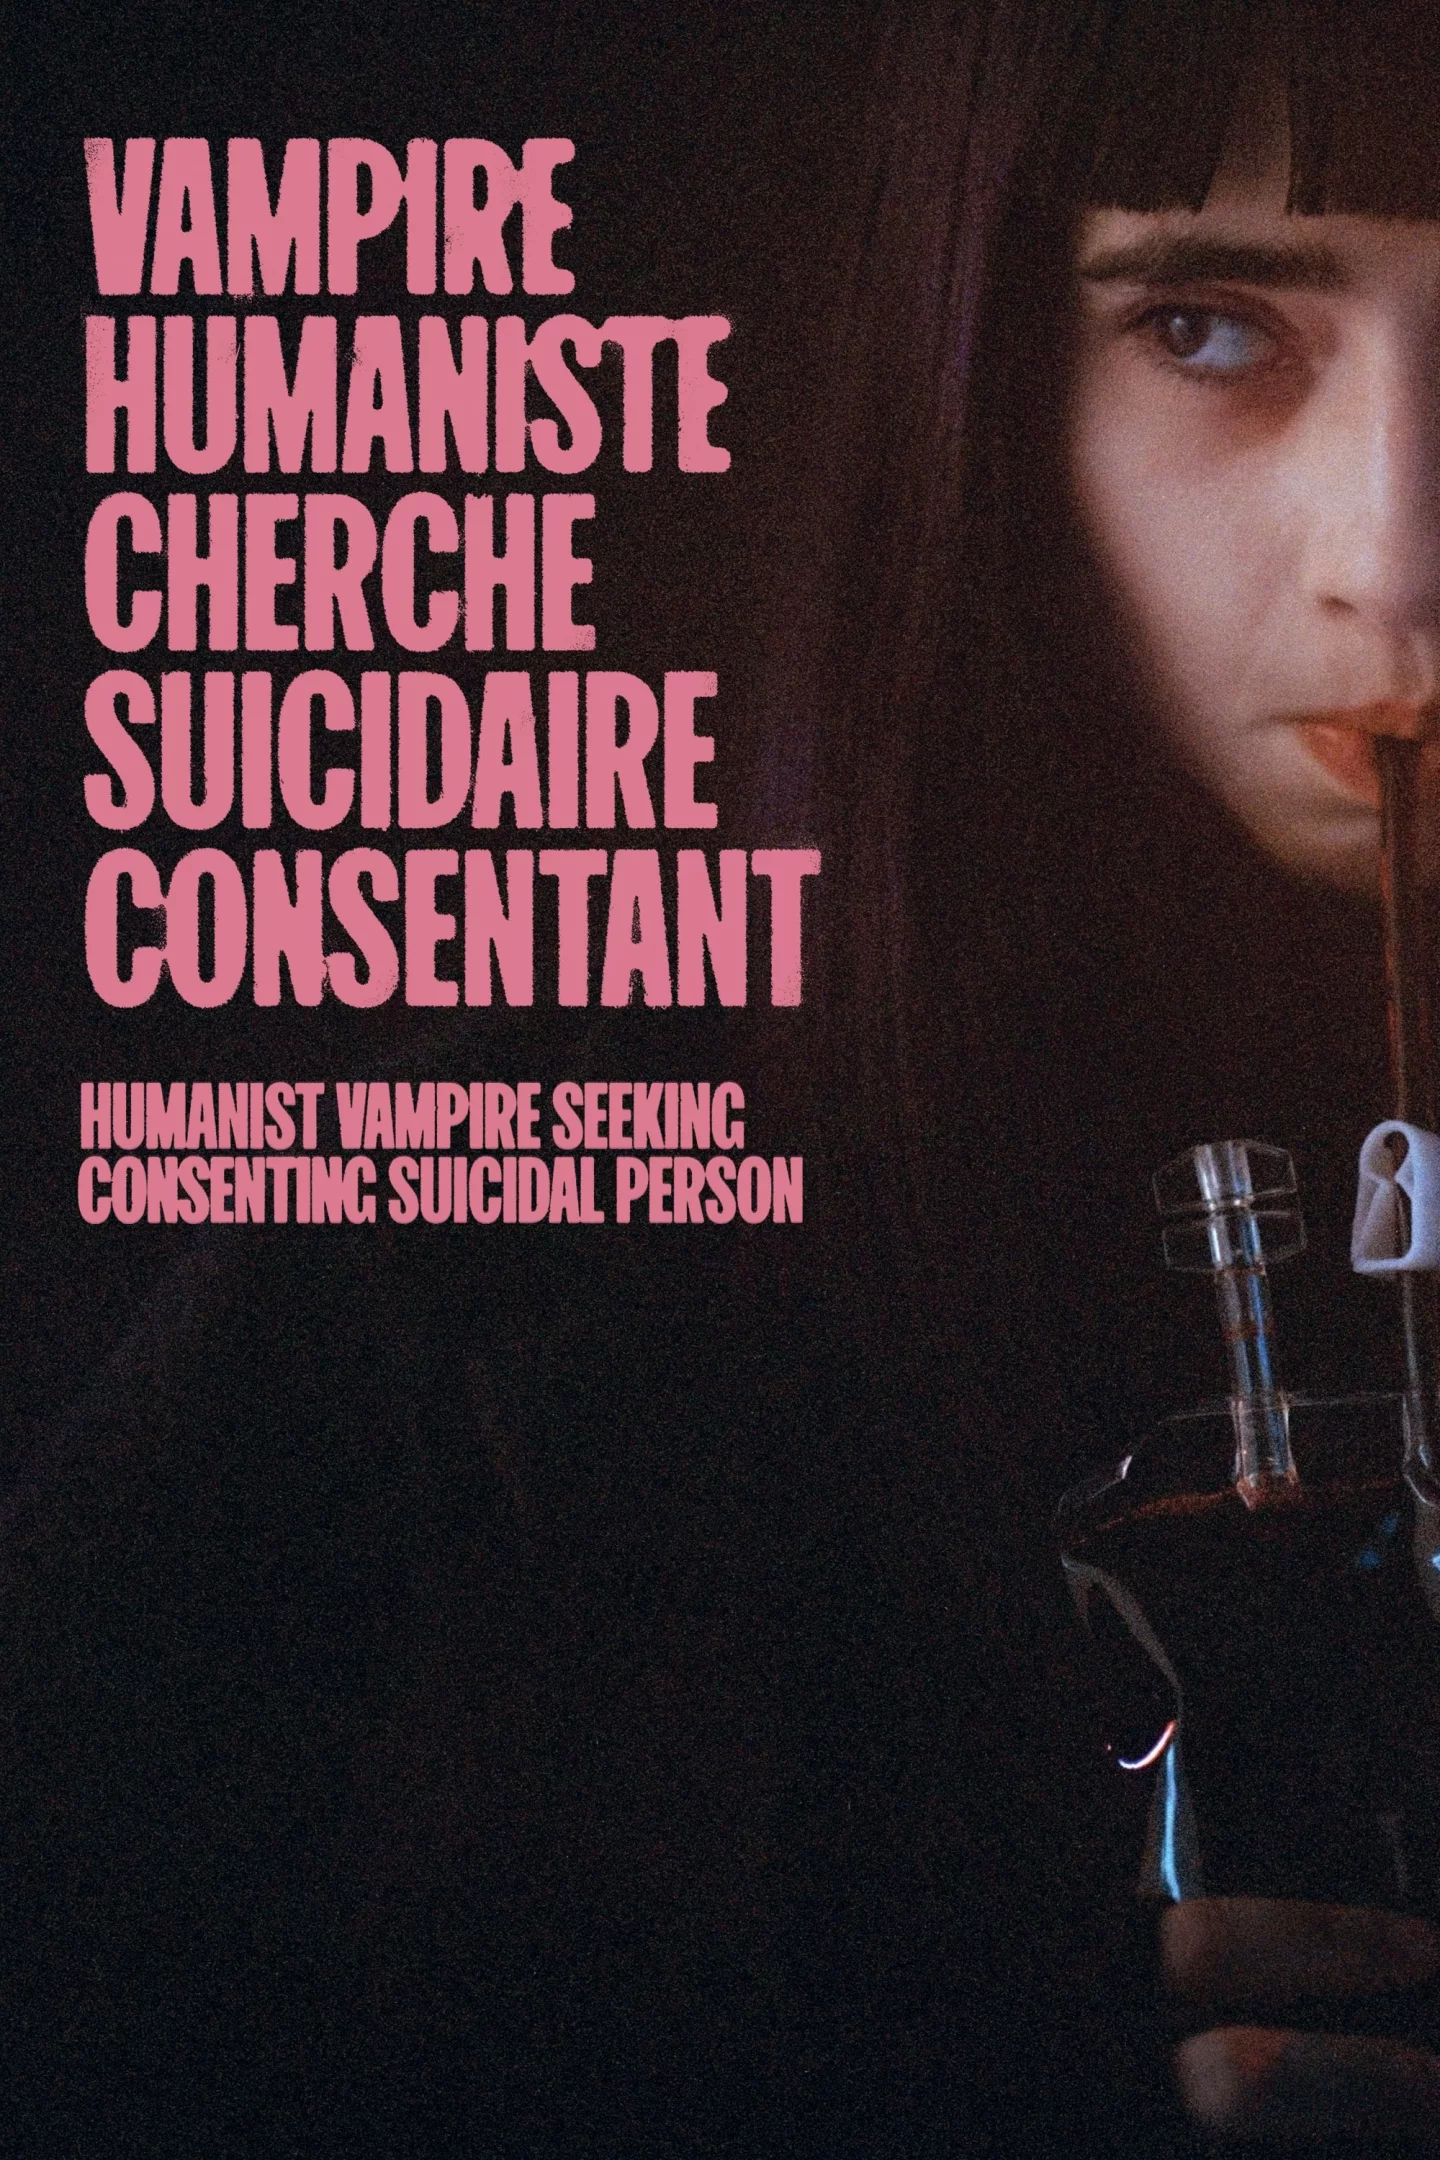 Photo 2 du film : Vampire humaniste cherche suicidaire consentant